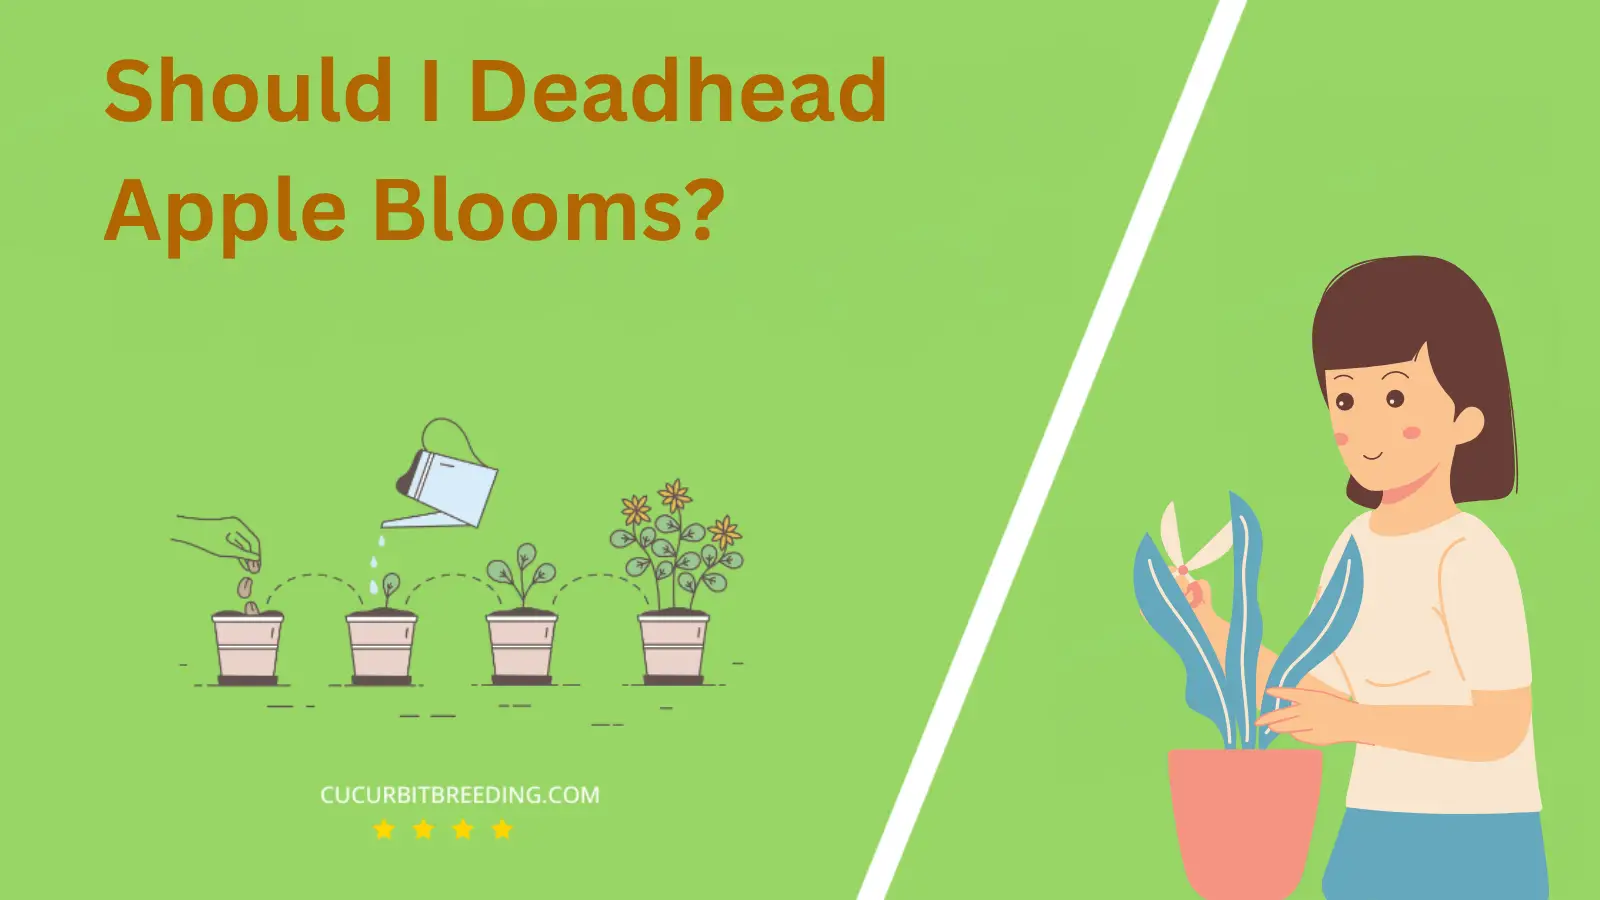 Should I Deadhead Apple Blooms?